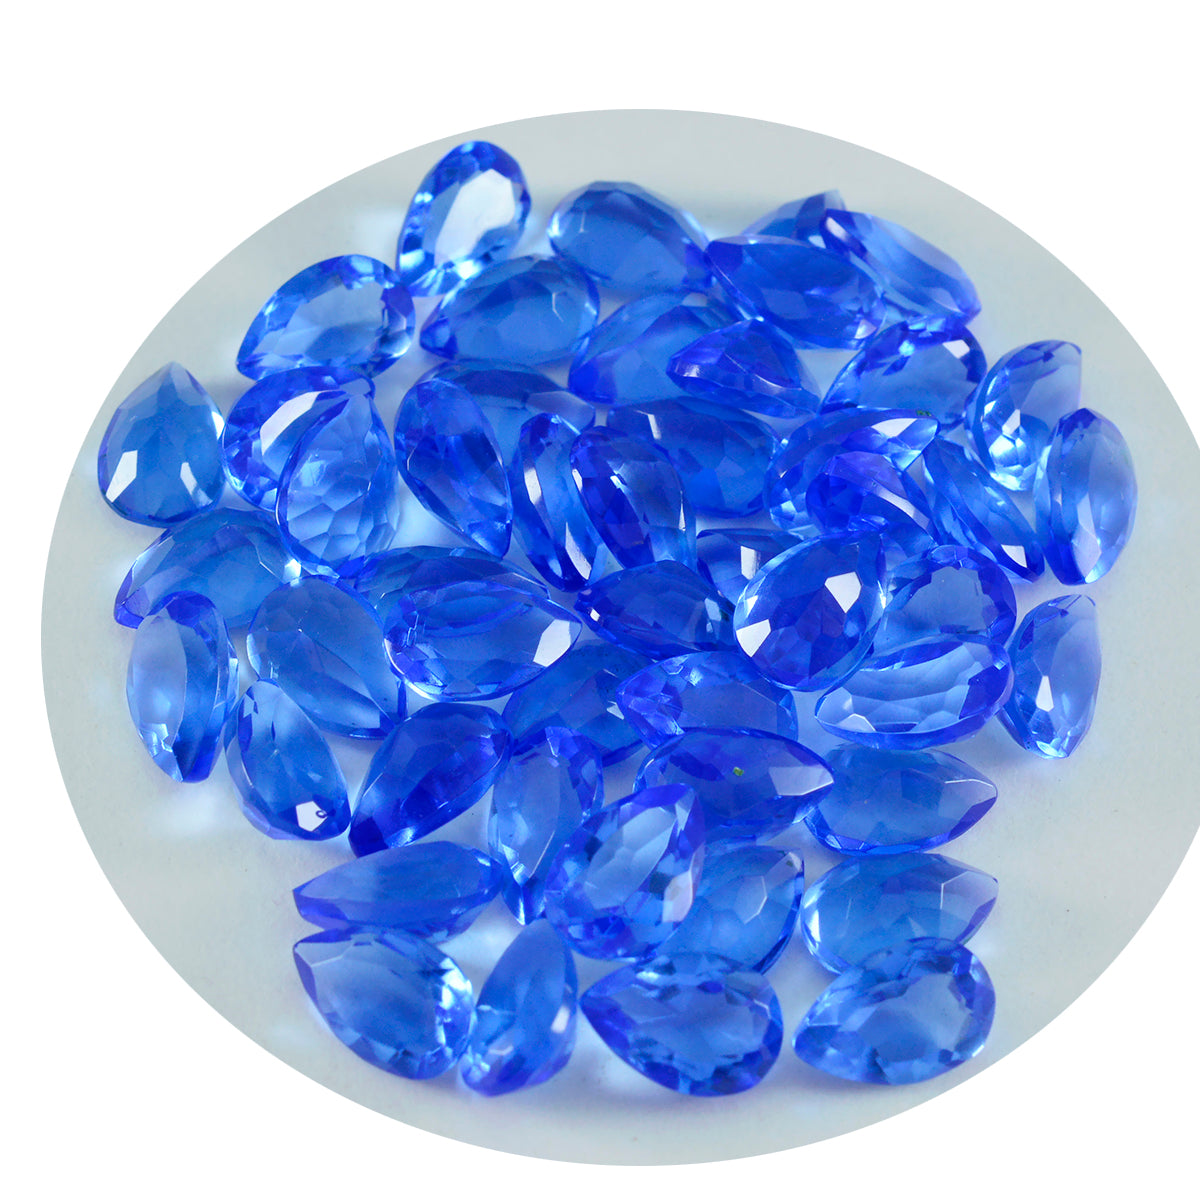 Riyogems 1PC Blauwe Saffier CZ Facet 5x7 mm Peervorm mooie kwaliteitsedelstenen